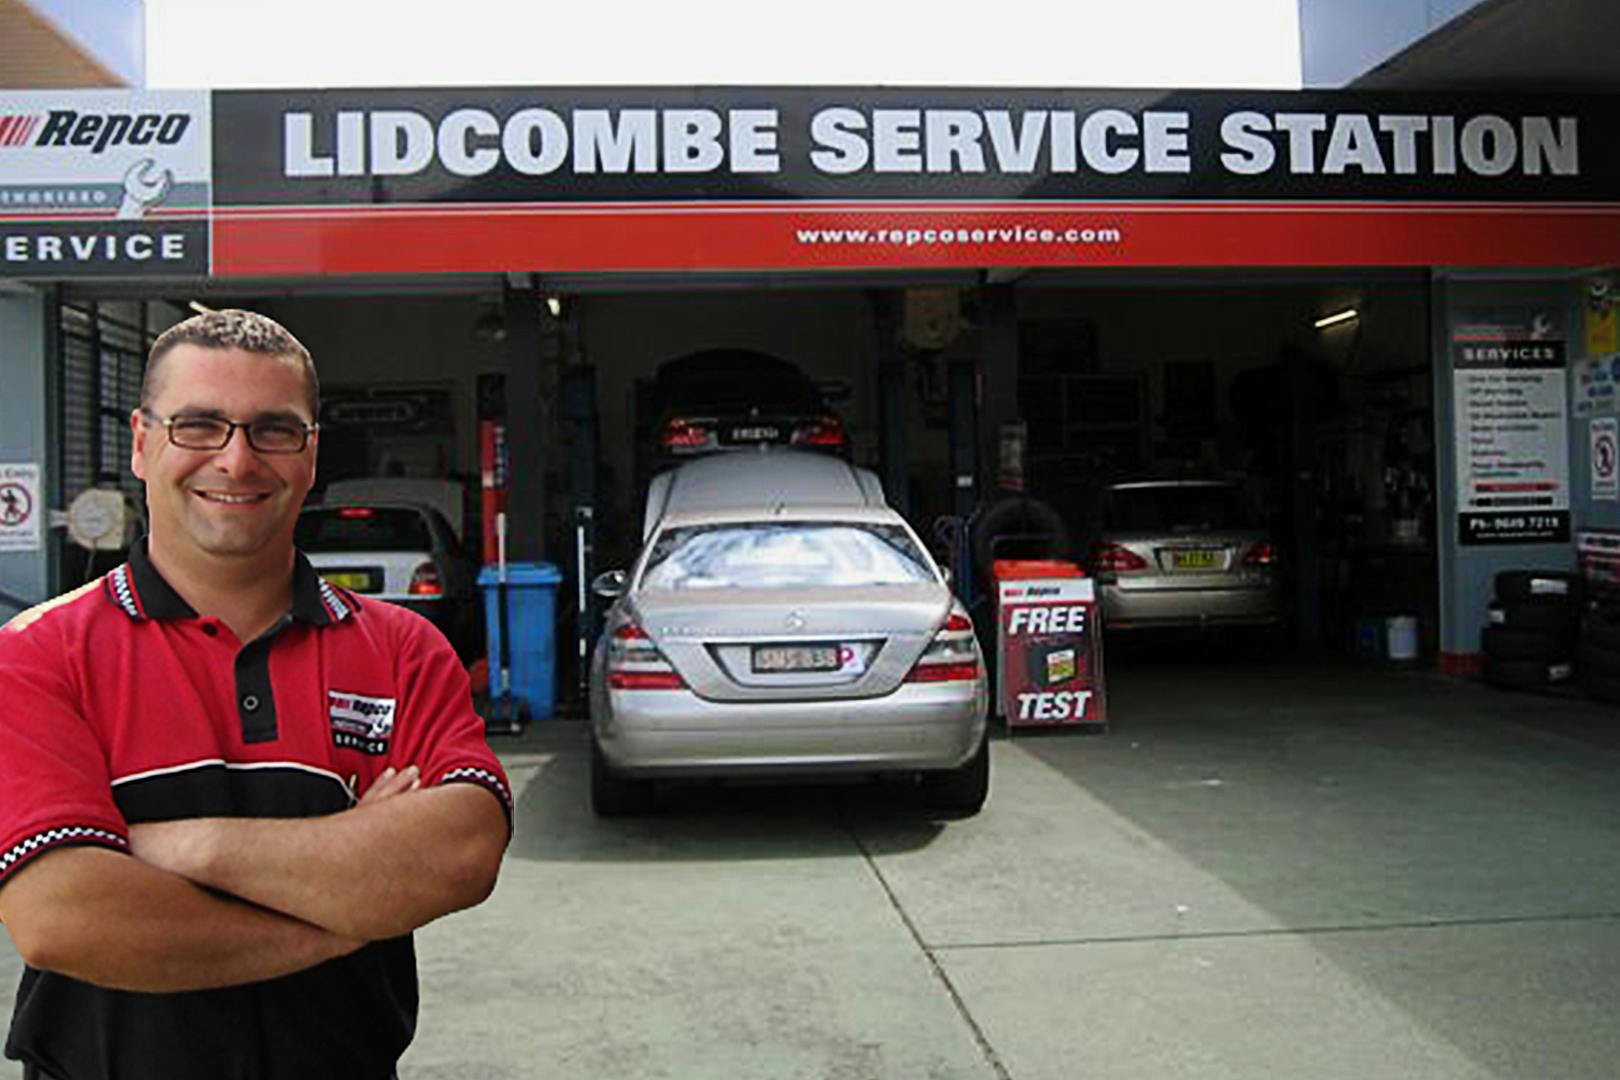 Lidcombe Service Station profile photo